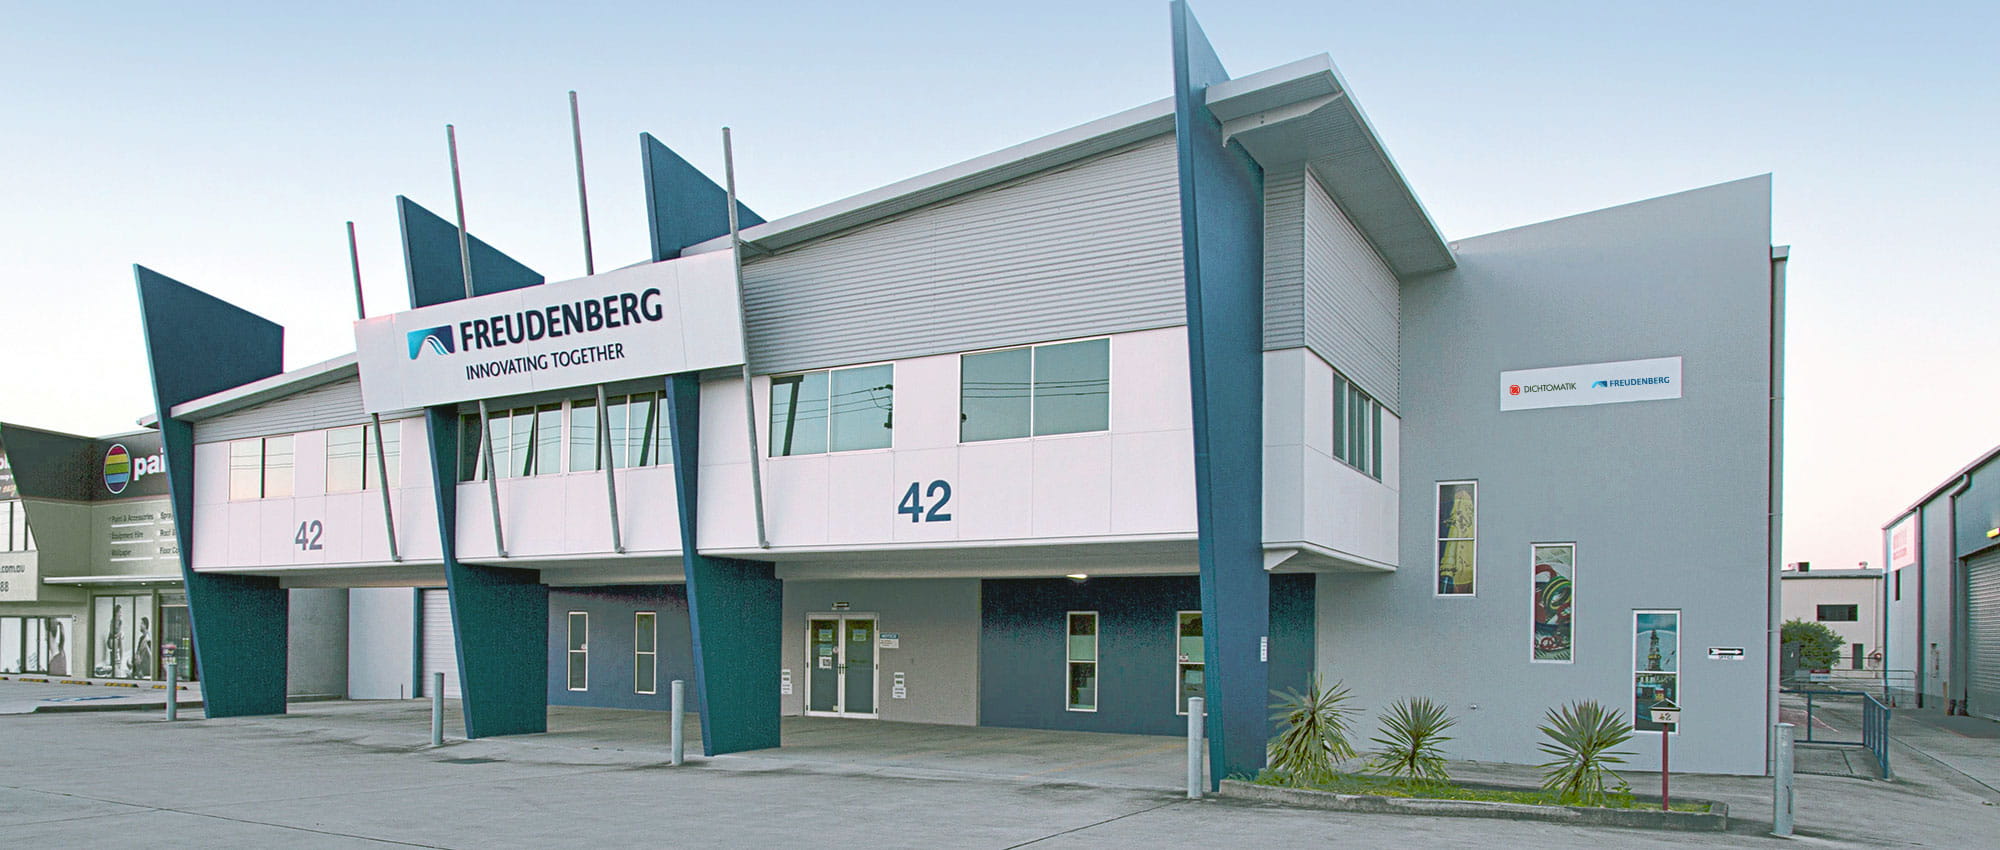 Freudenberg office front of building in Australia